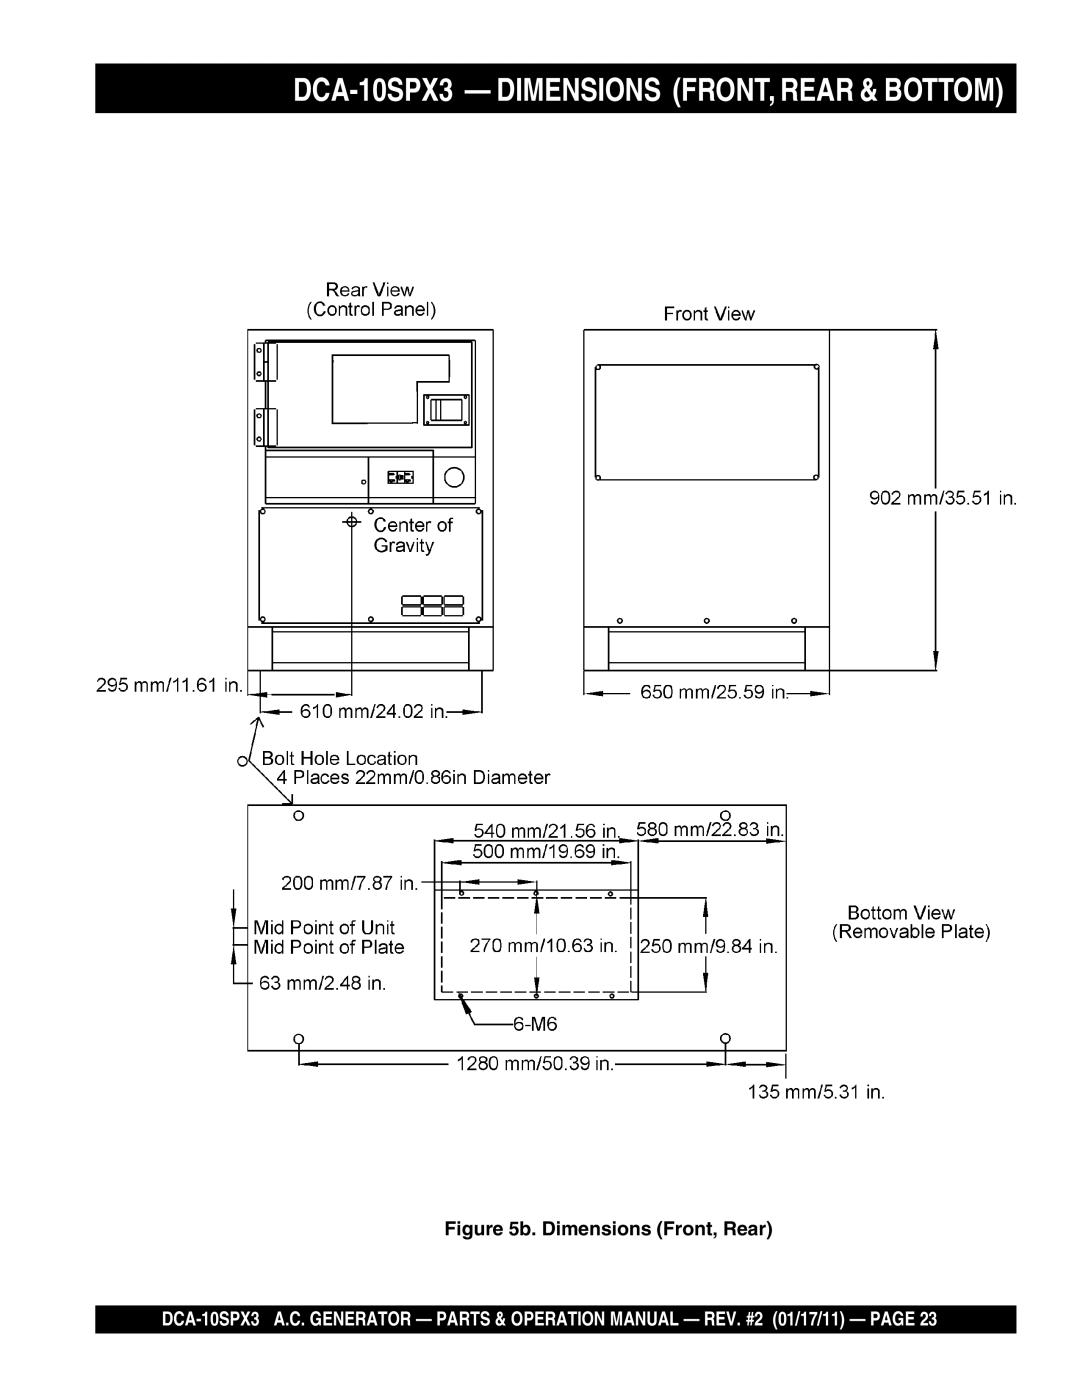 Multiquip DCA10SPX3 manual DCA-10SPX3 - DIMENSIONS FRONT, REAR & BOTTOM, b. Dimensions Front, Rear 